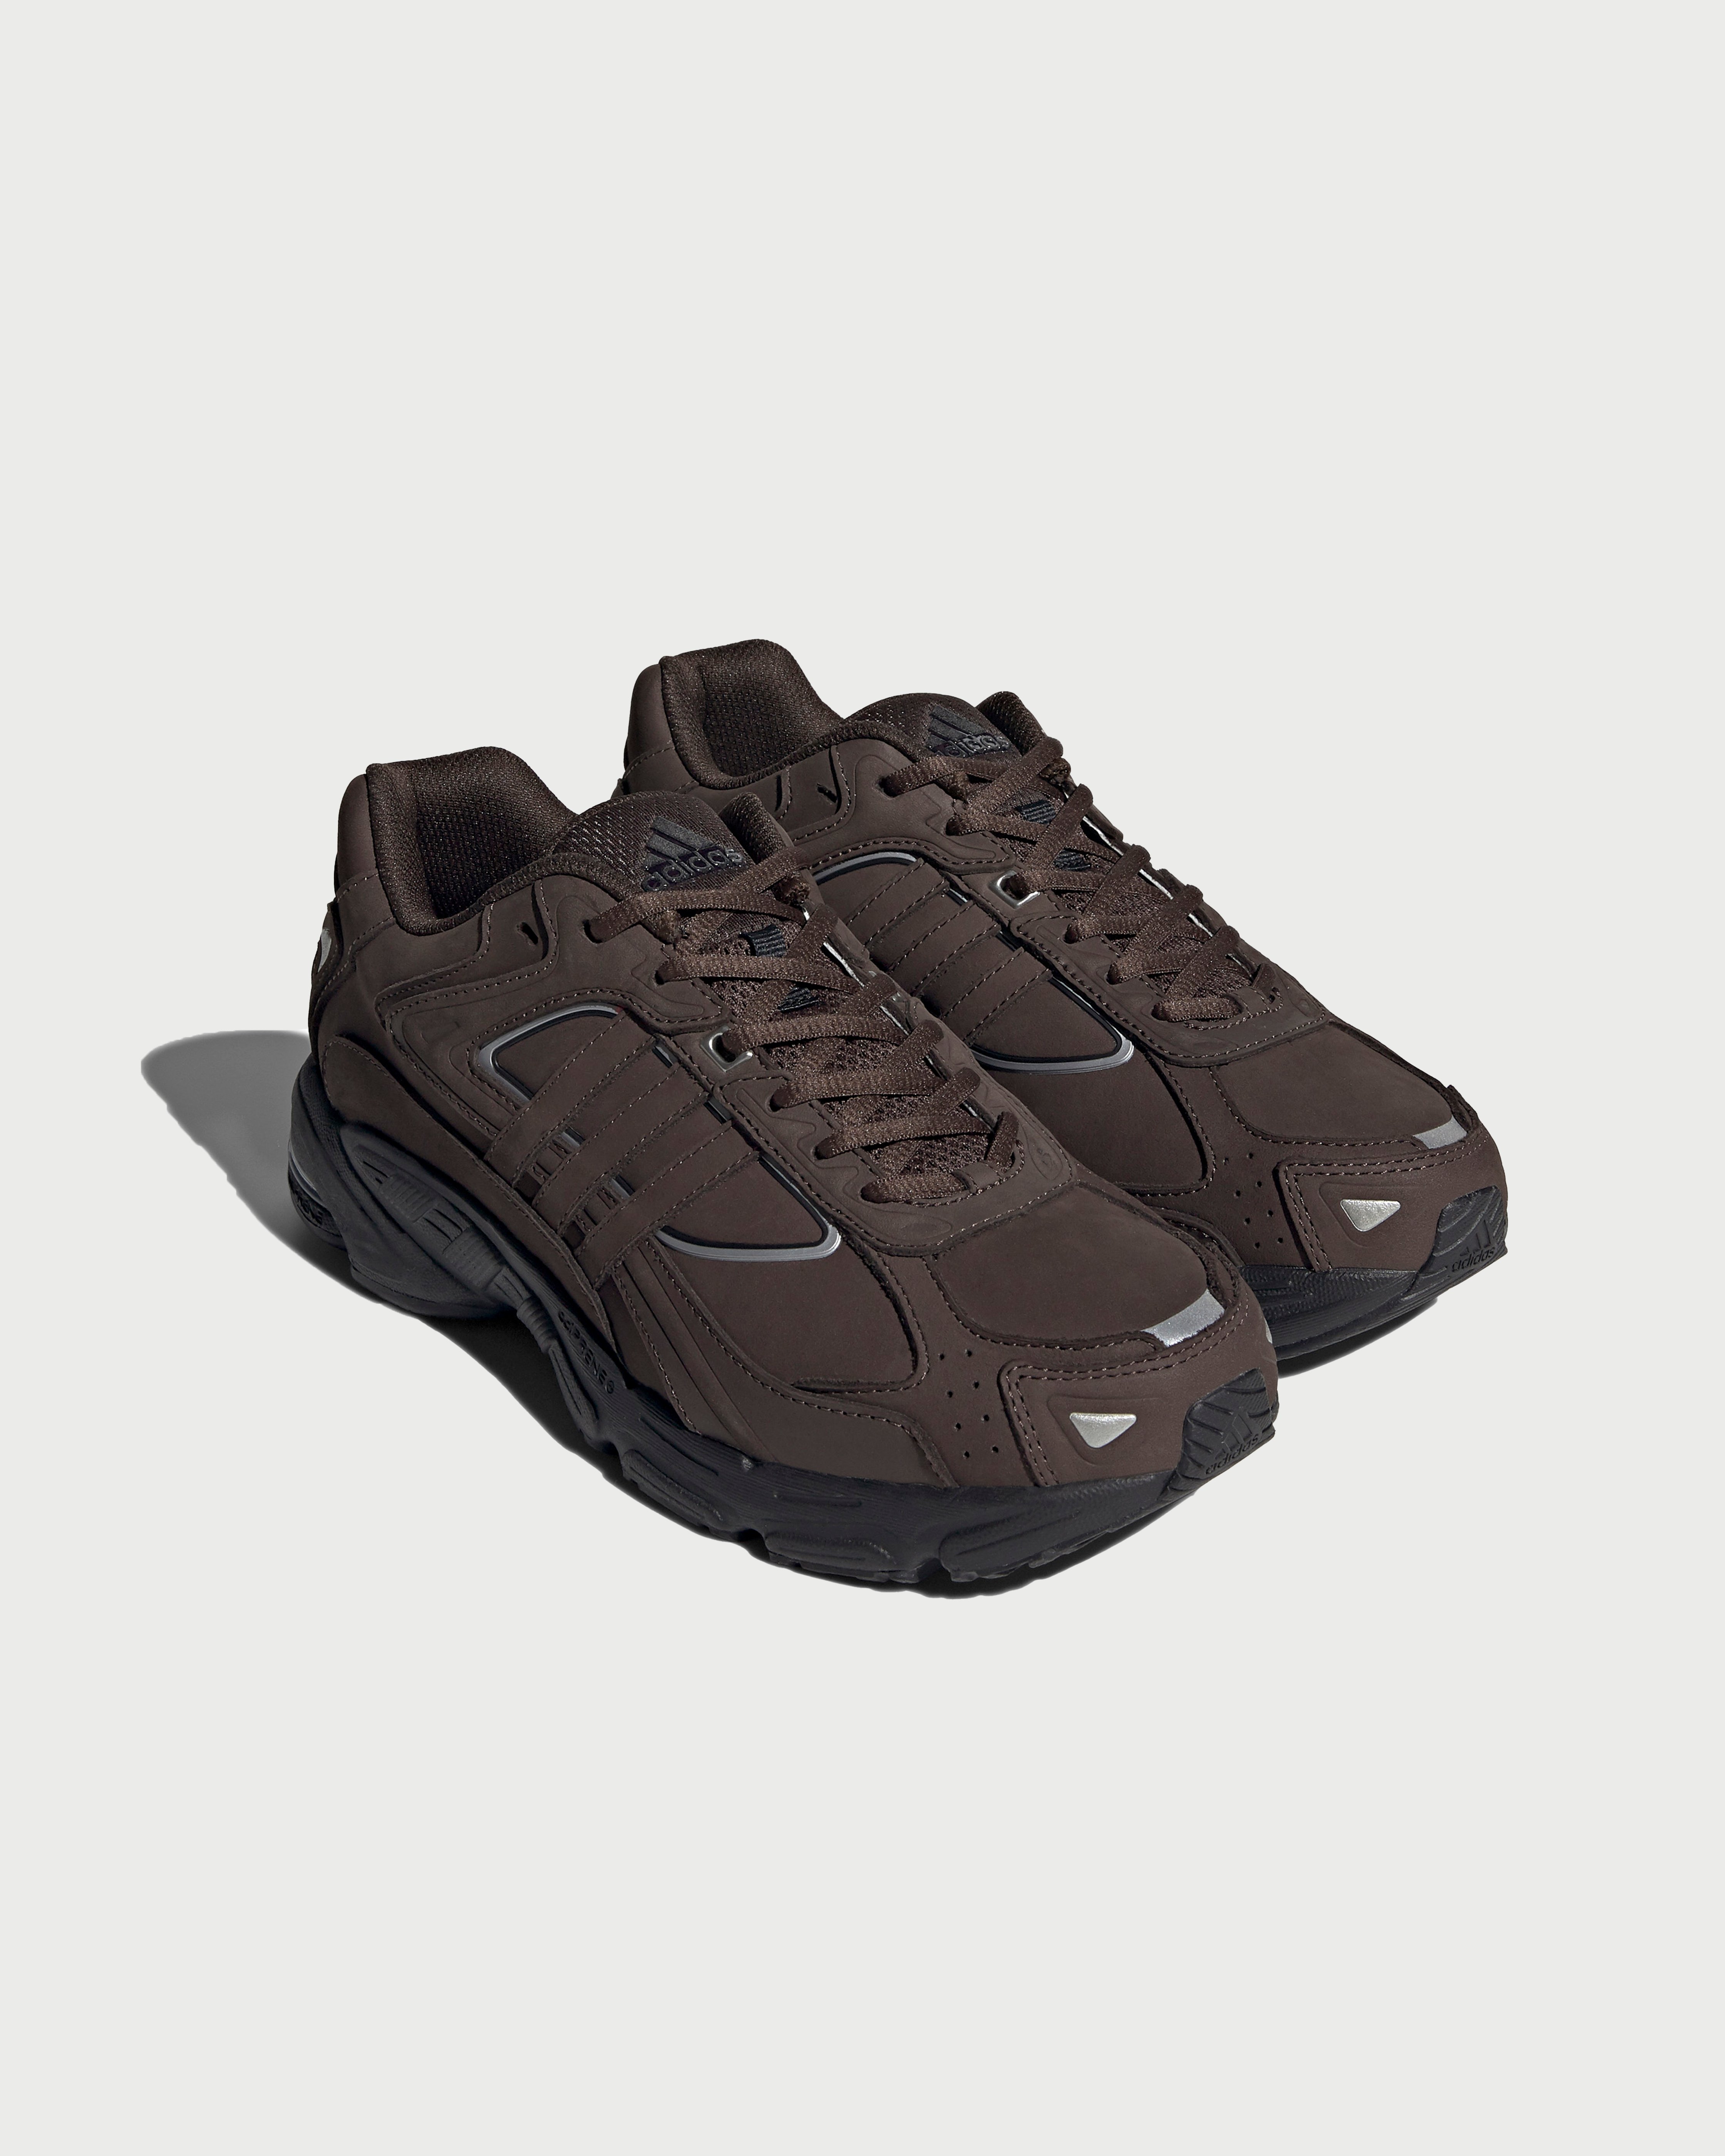 Adidas - Response CL Brown - Footwear - Brown - Image 2